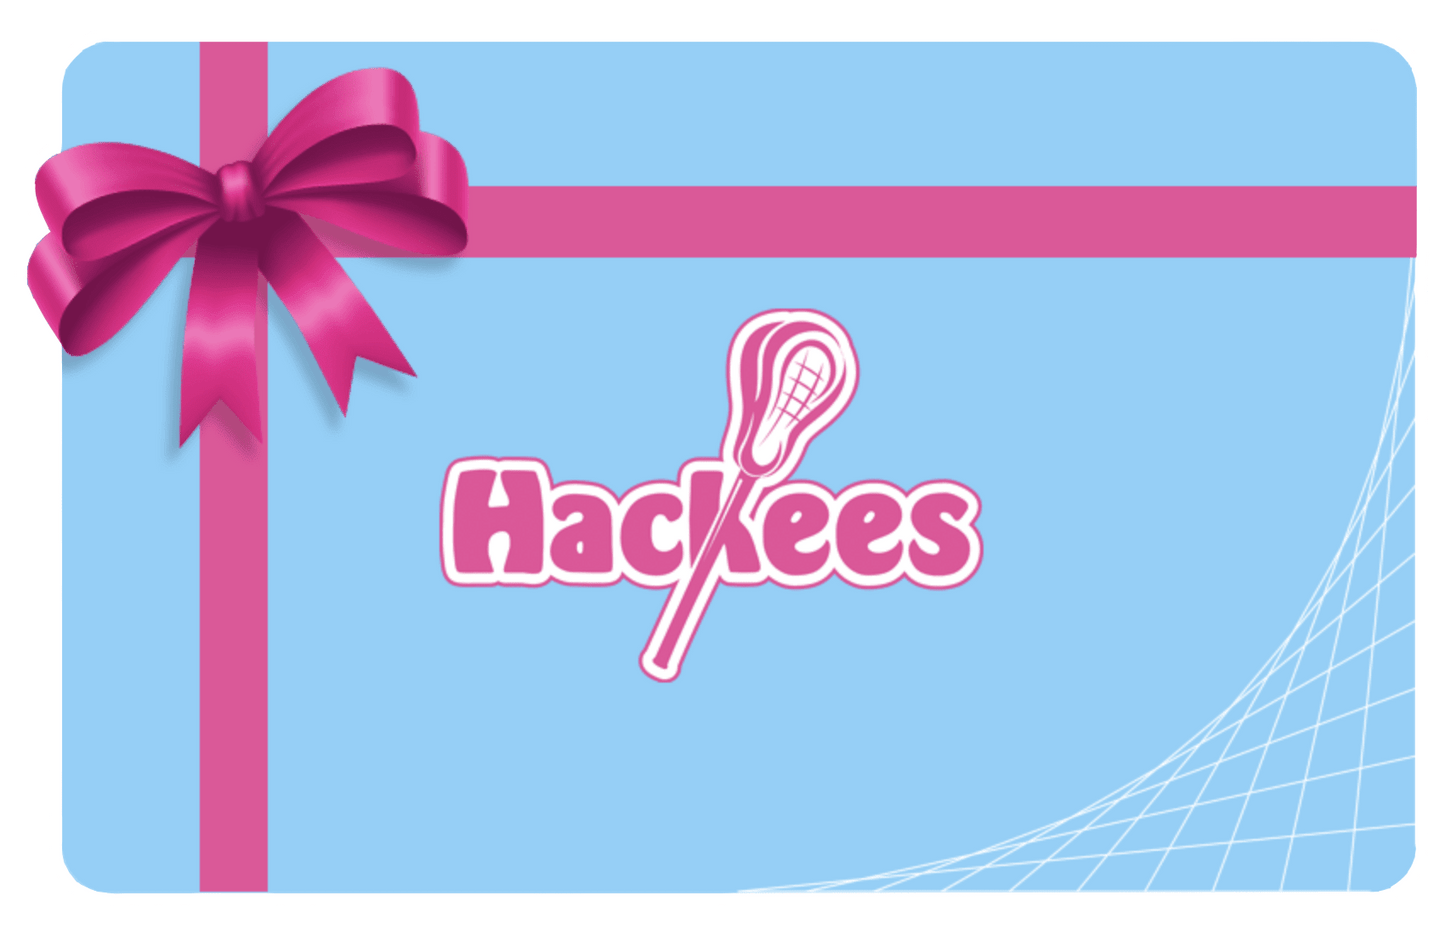 Hackees Lacrosse Gift Card Gift Cards Hackees 